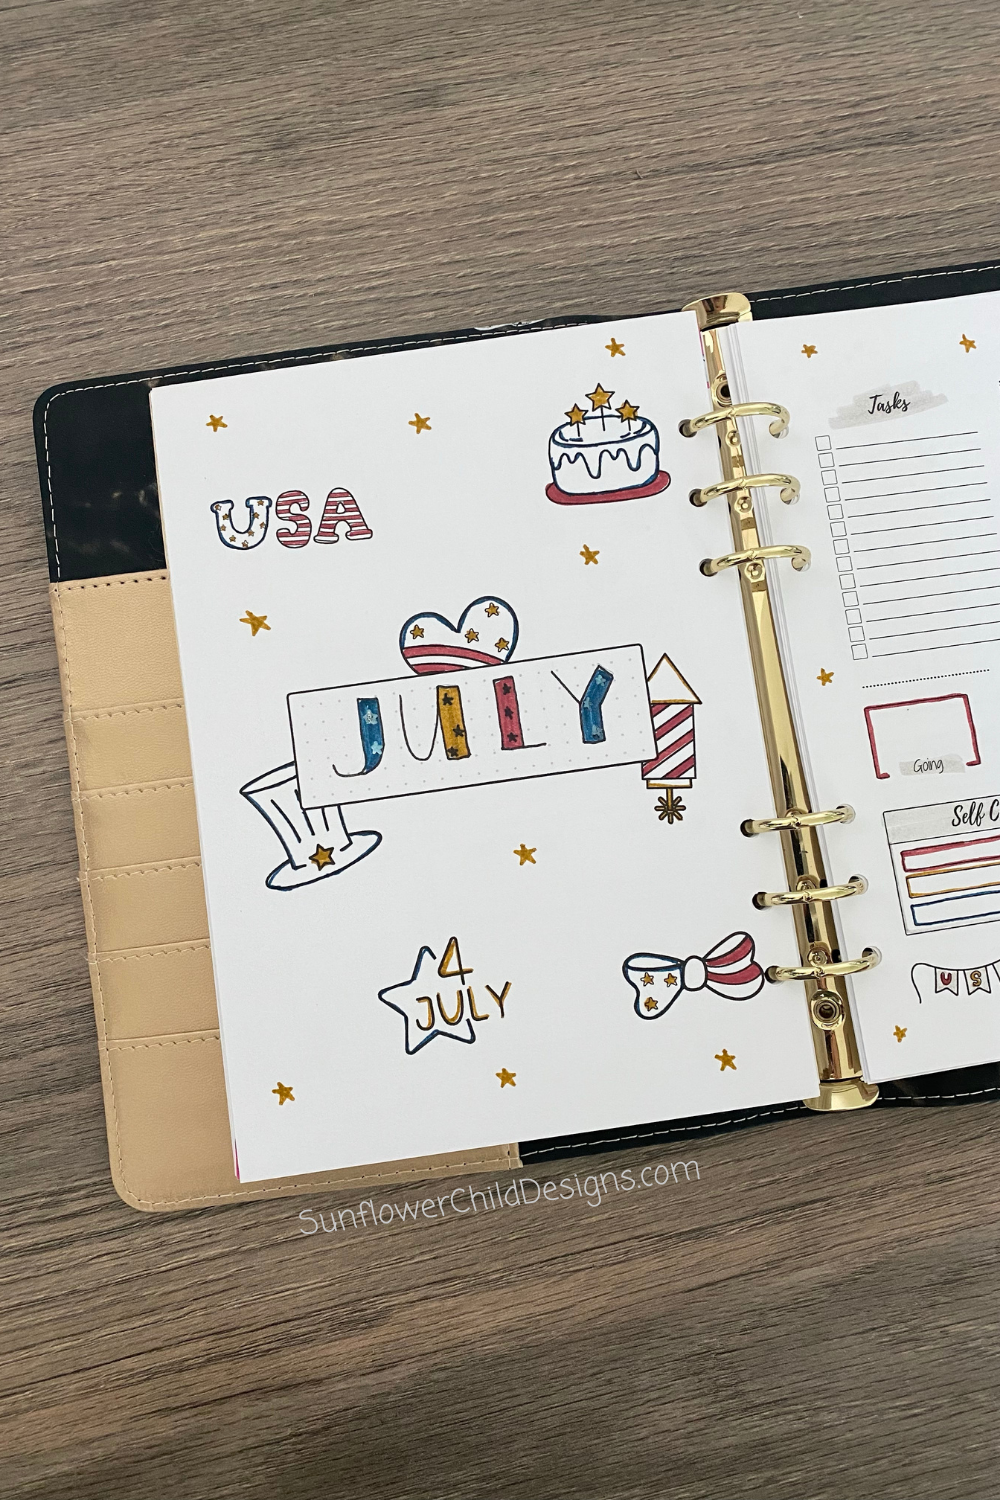 November Bullet Journal Ideas Using Printable Planner Stickers